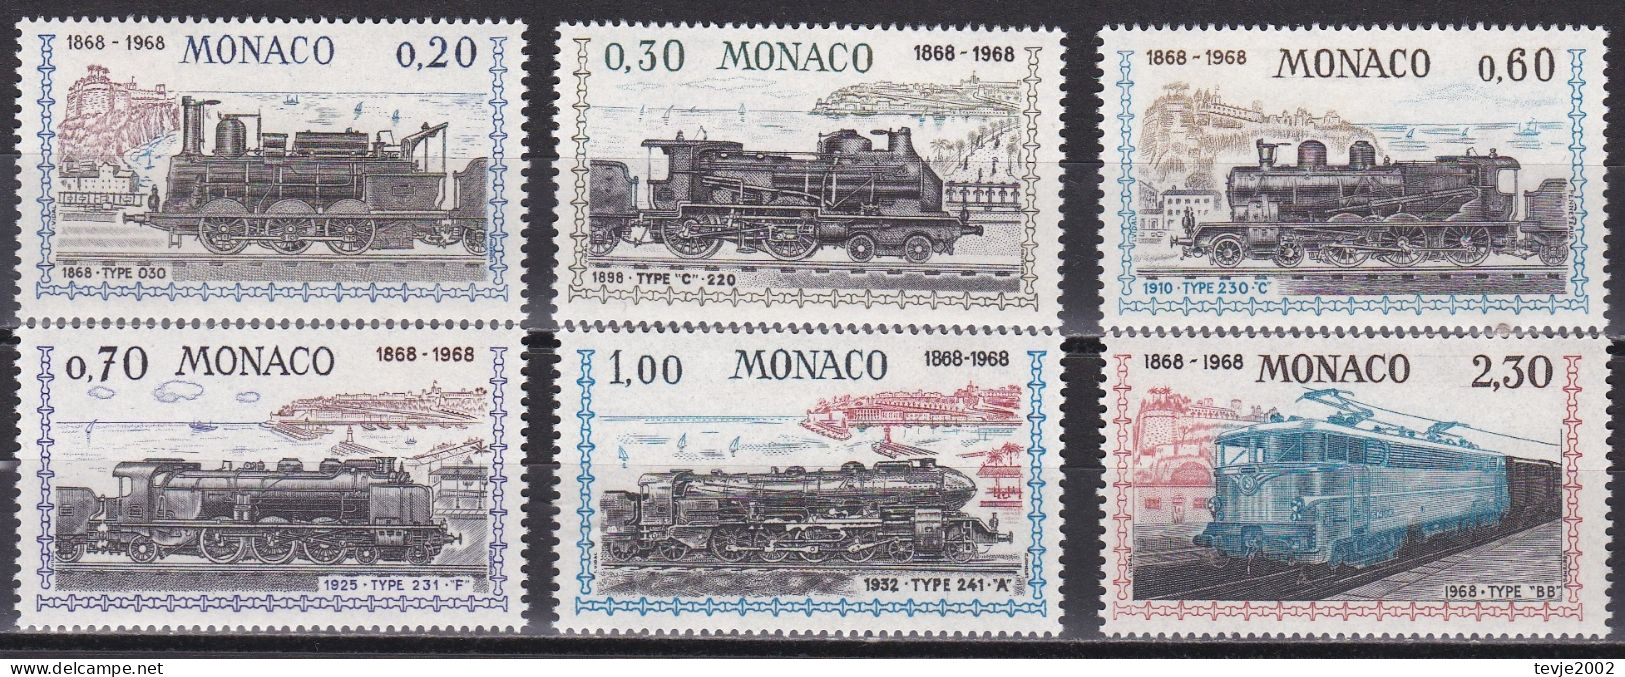 Monaco 1968 - Mi.Nr. 896 - 901 - Postfrisch MNH - Eisenbahnen Railways Lokomotiven Locomotives - Treni